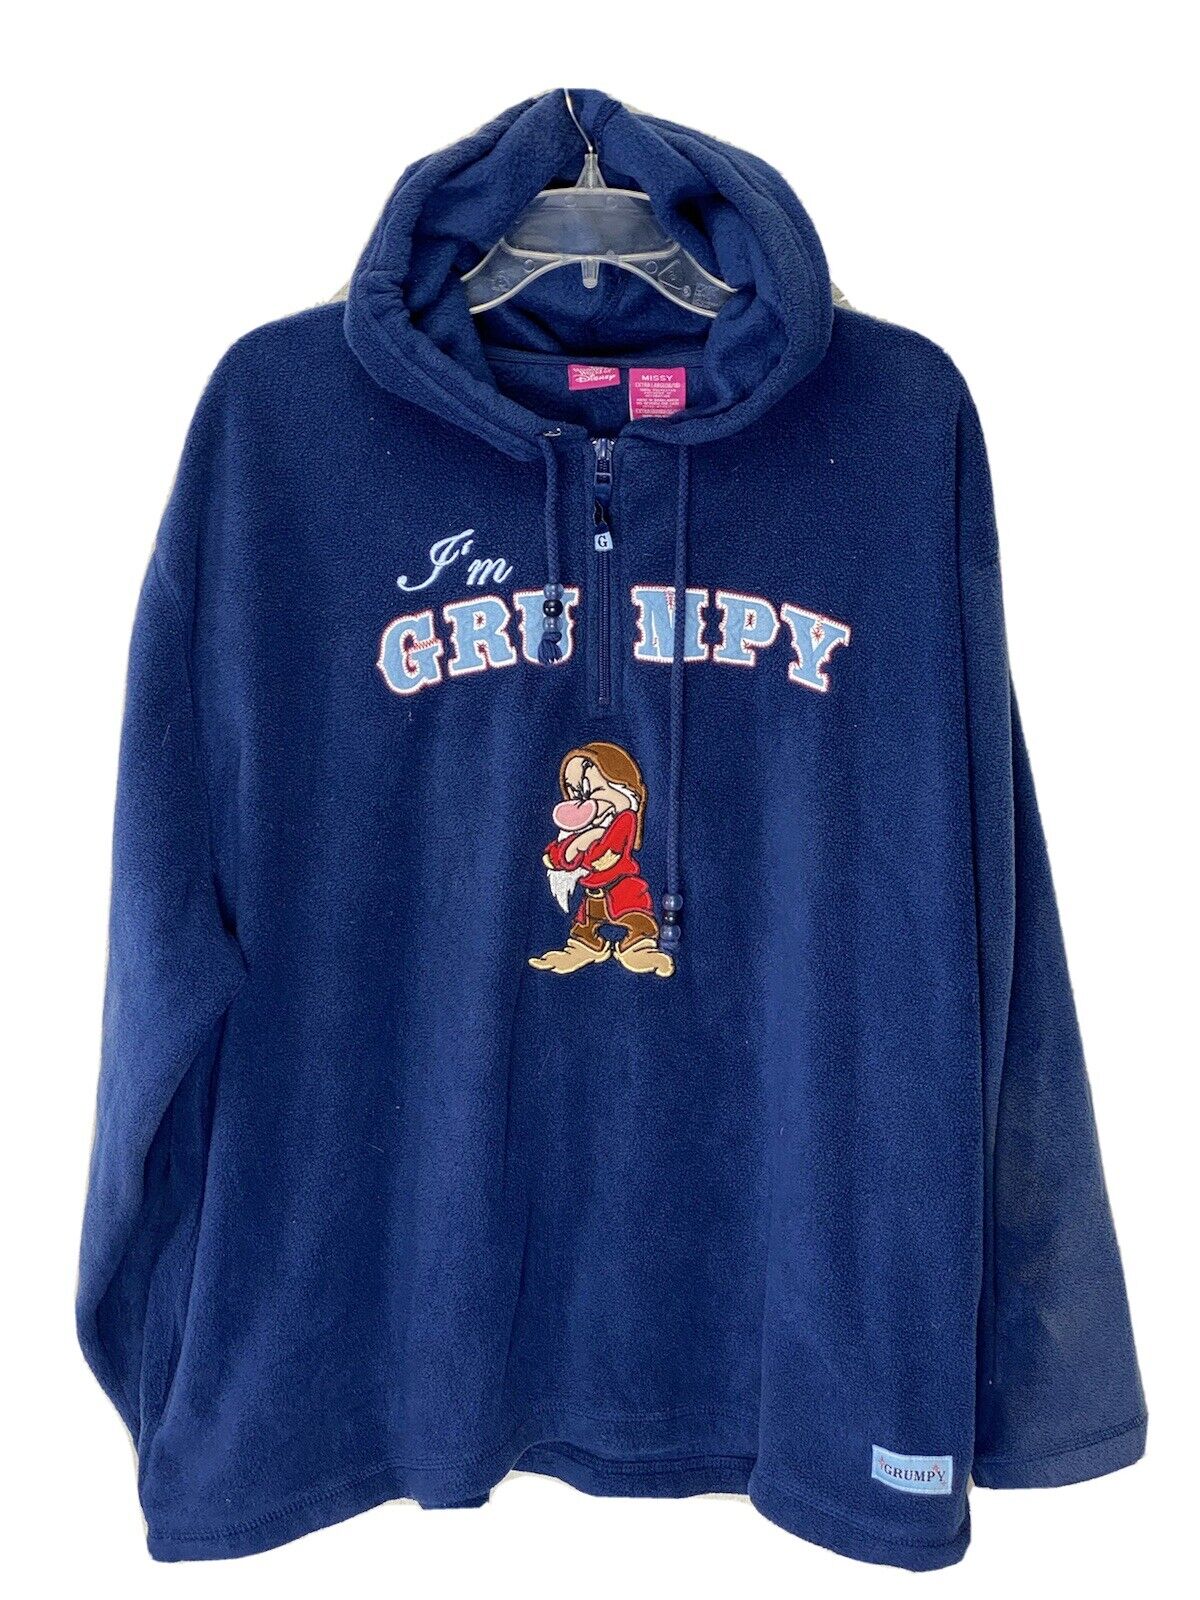 The Wonderful World Of Disney Hooded Sweatshirt Size XL Grumpy 1/4 Zip Blue